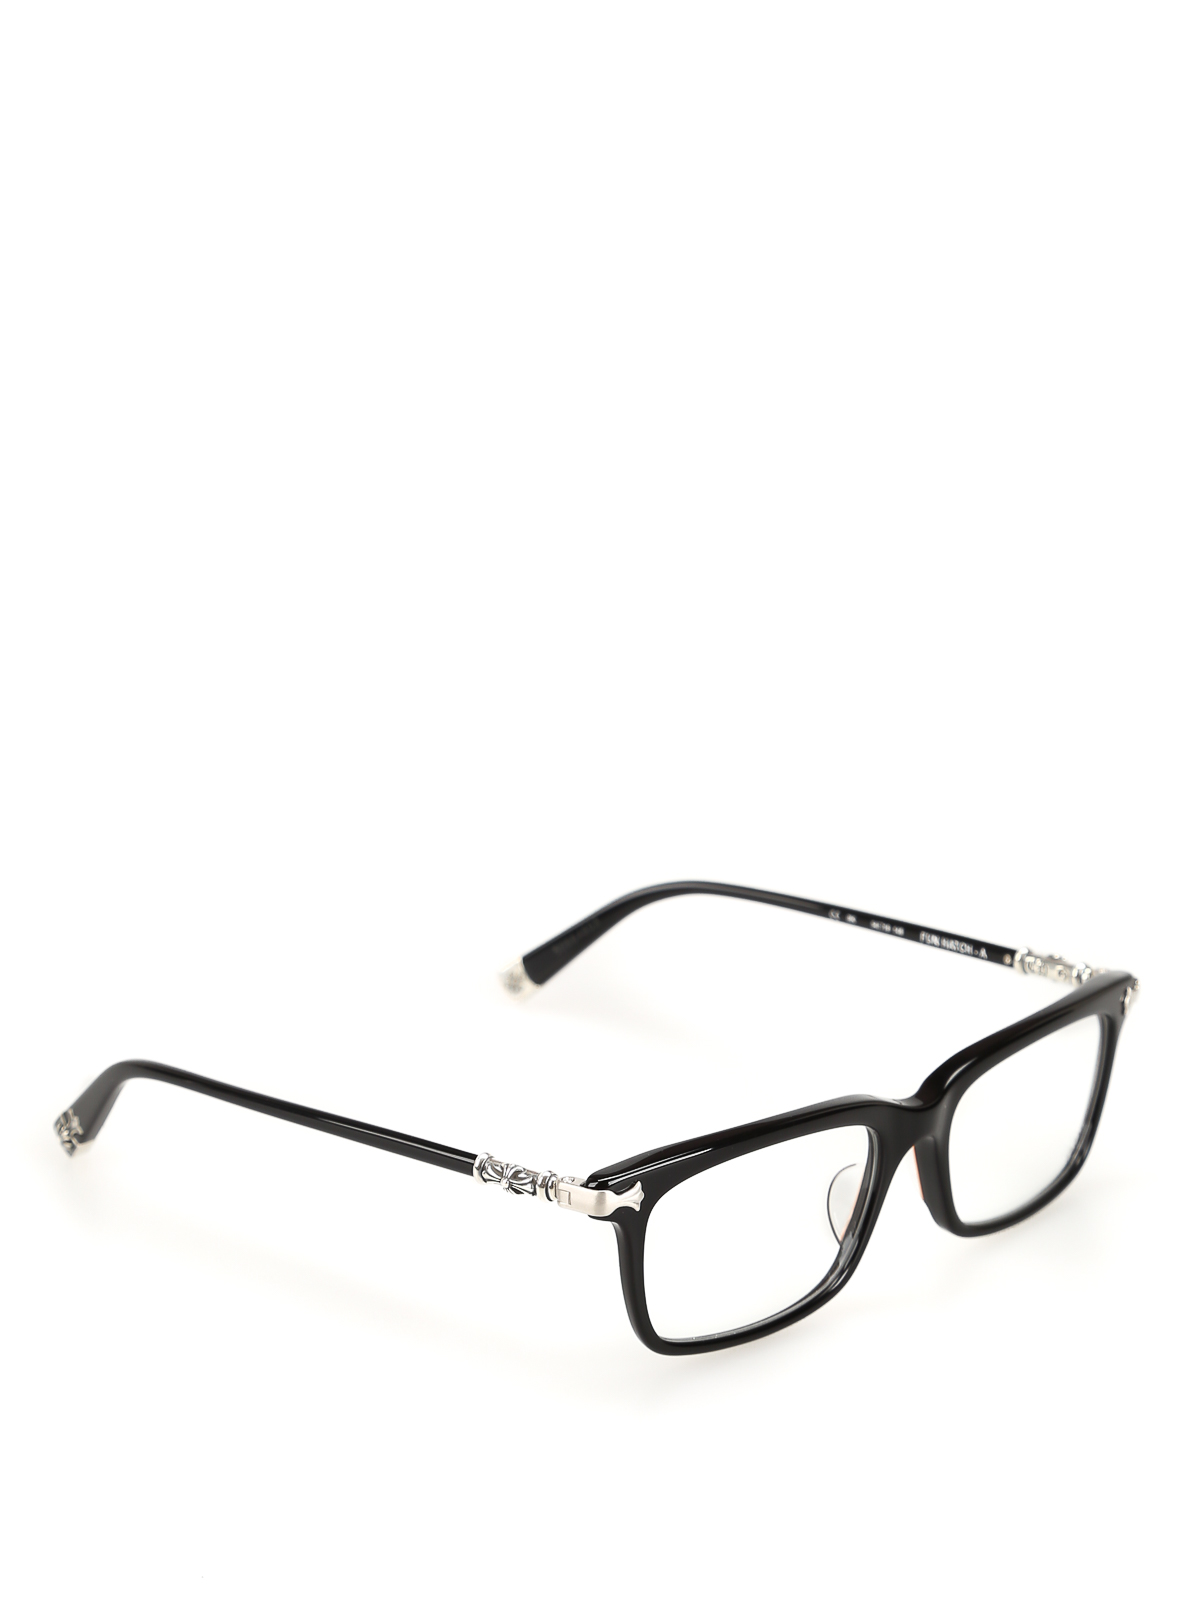 https://images.thebestshops.com/product_images/original/chrome-hearts-glasses-fun-hatch-black-titanium-eyeglasses-00000157929f00s001.jpg